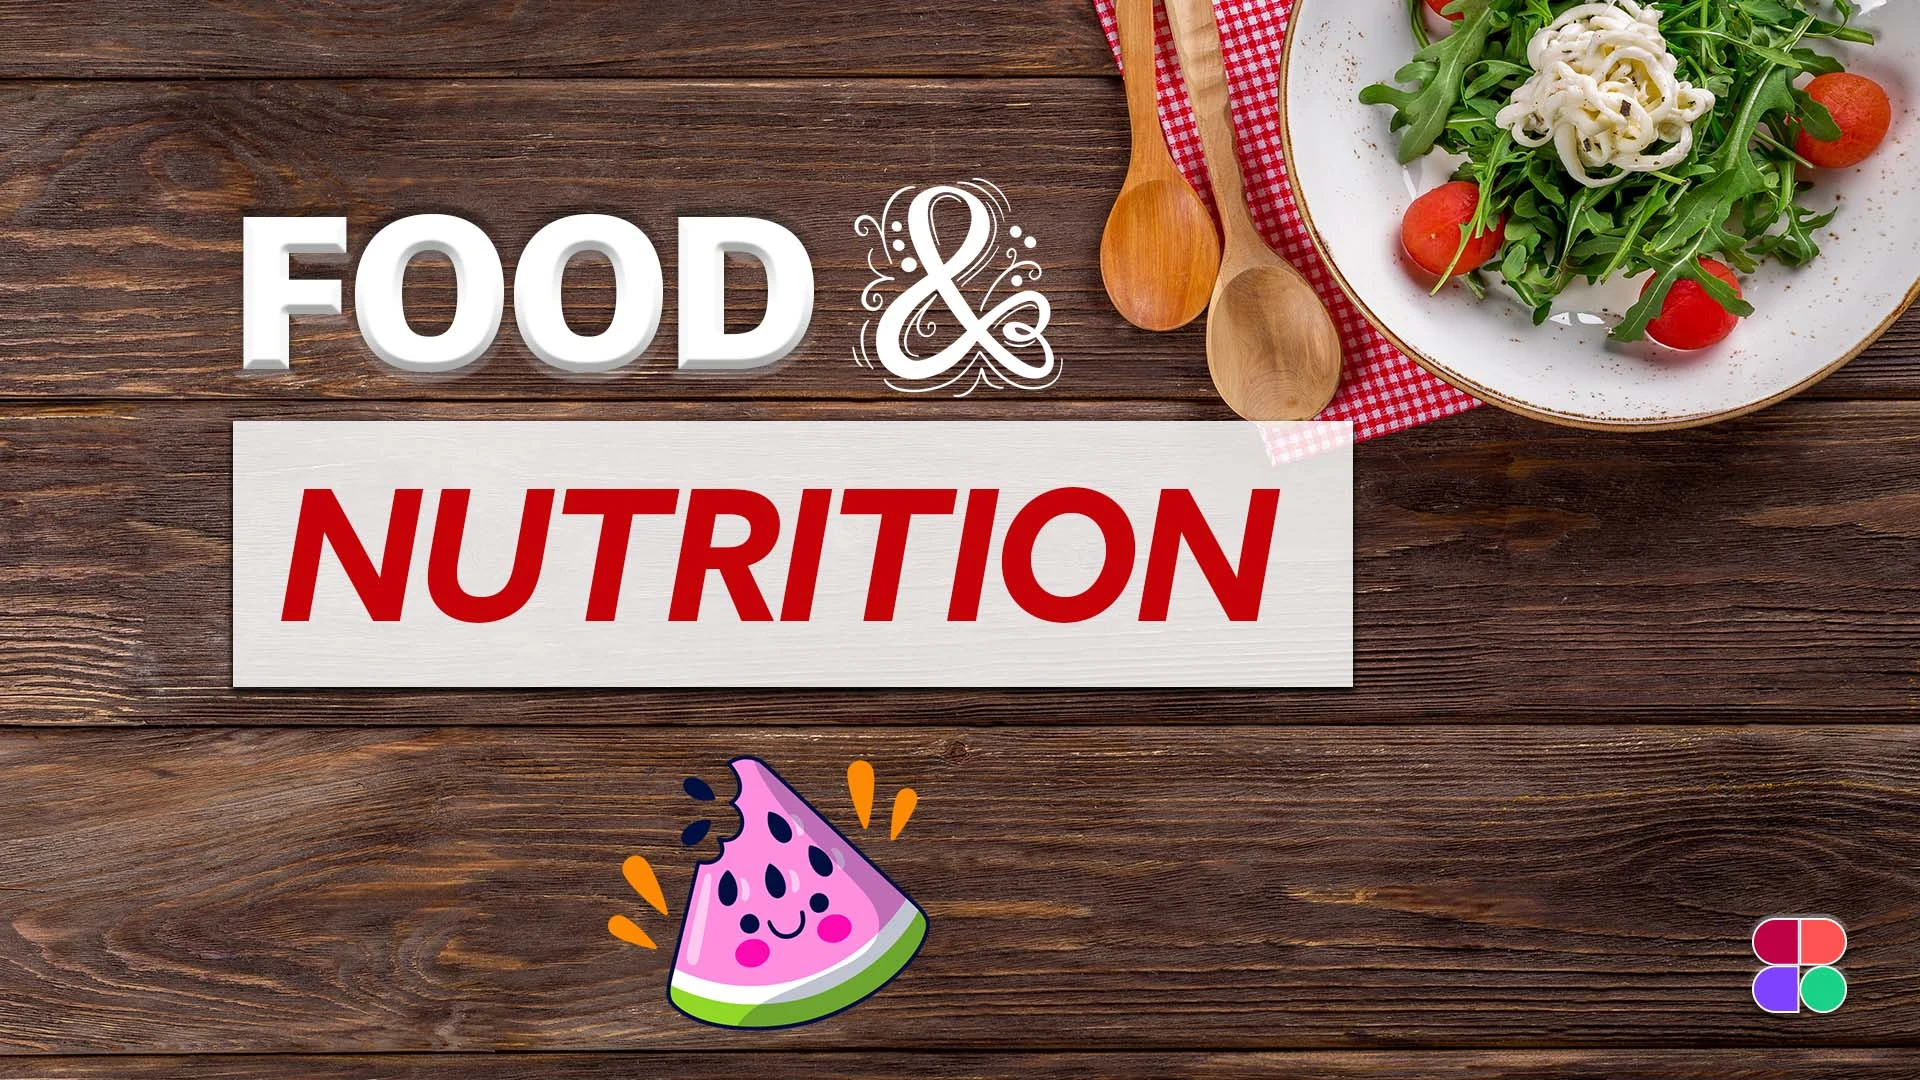 Food & Nutrition 🍔